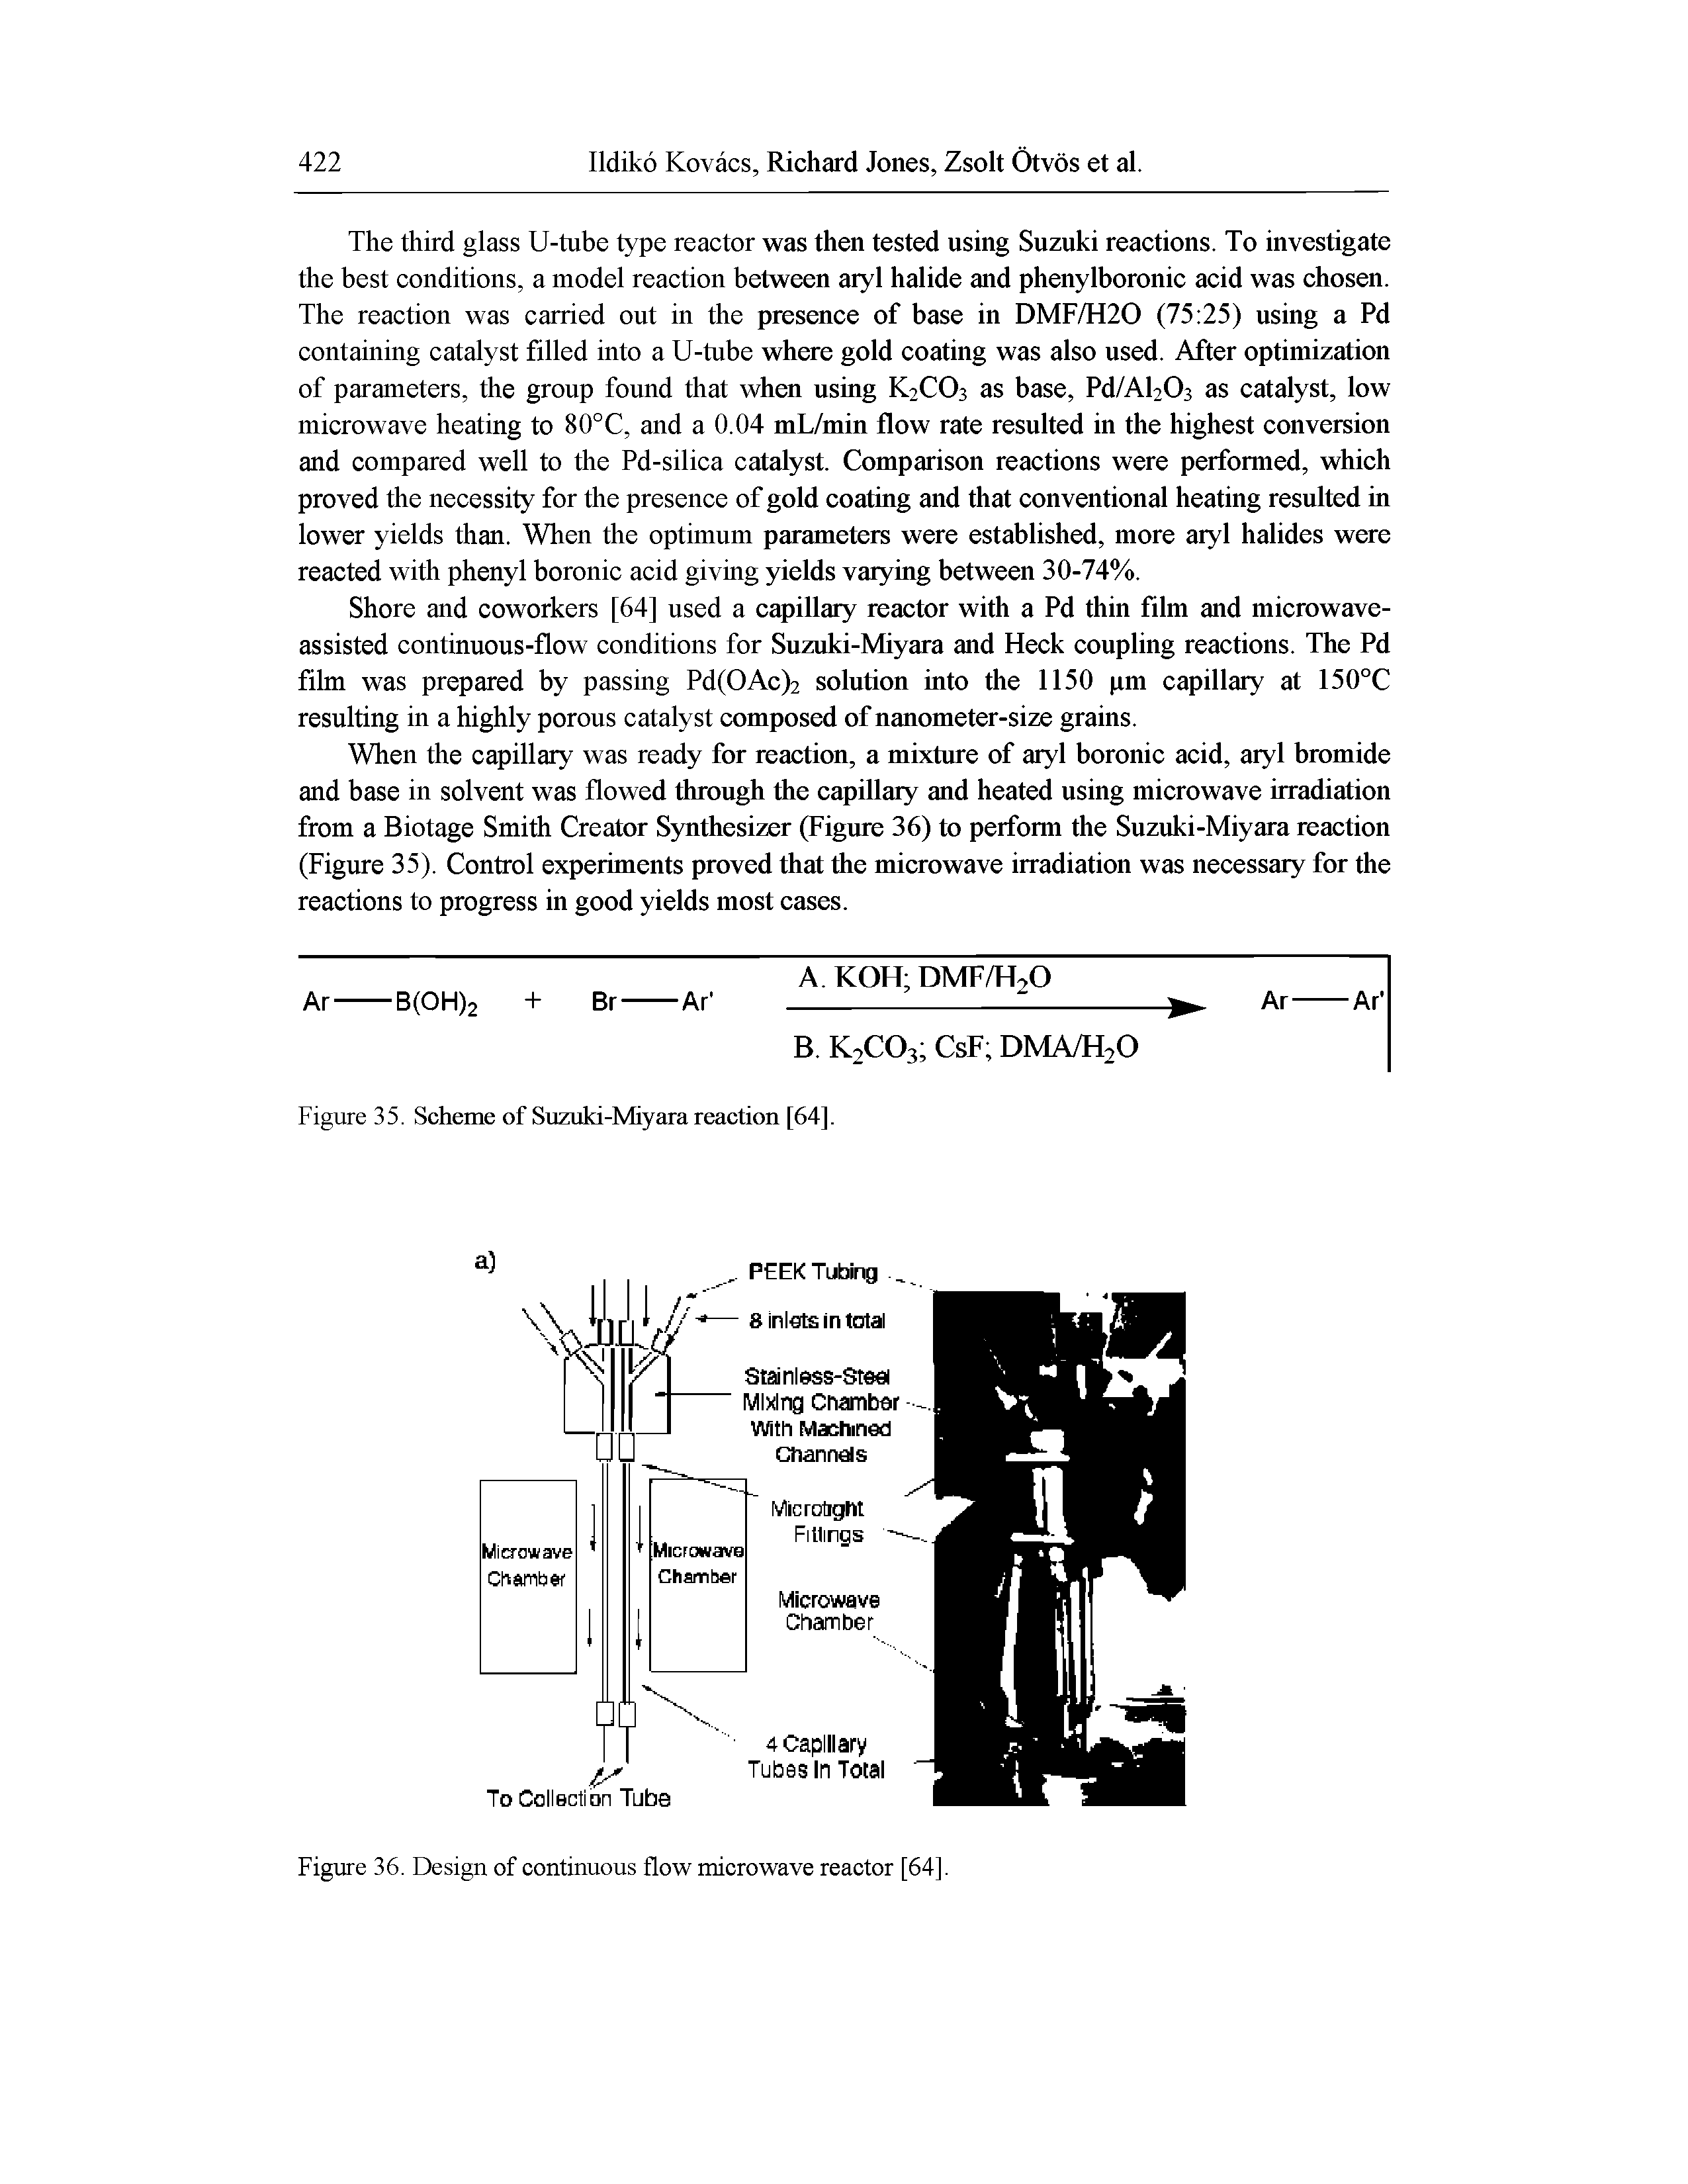 Figure 36. Design of continuous flow microwave reactor [64].